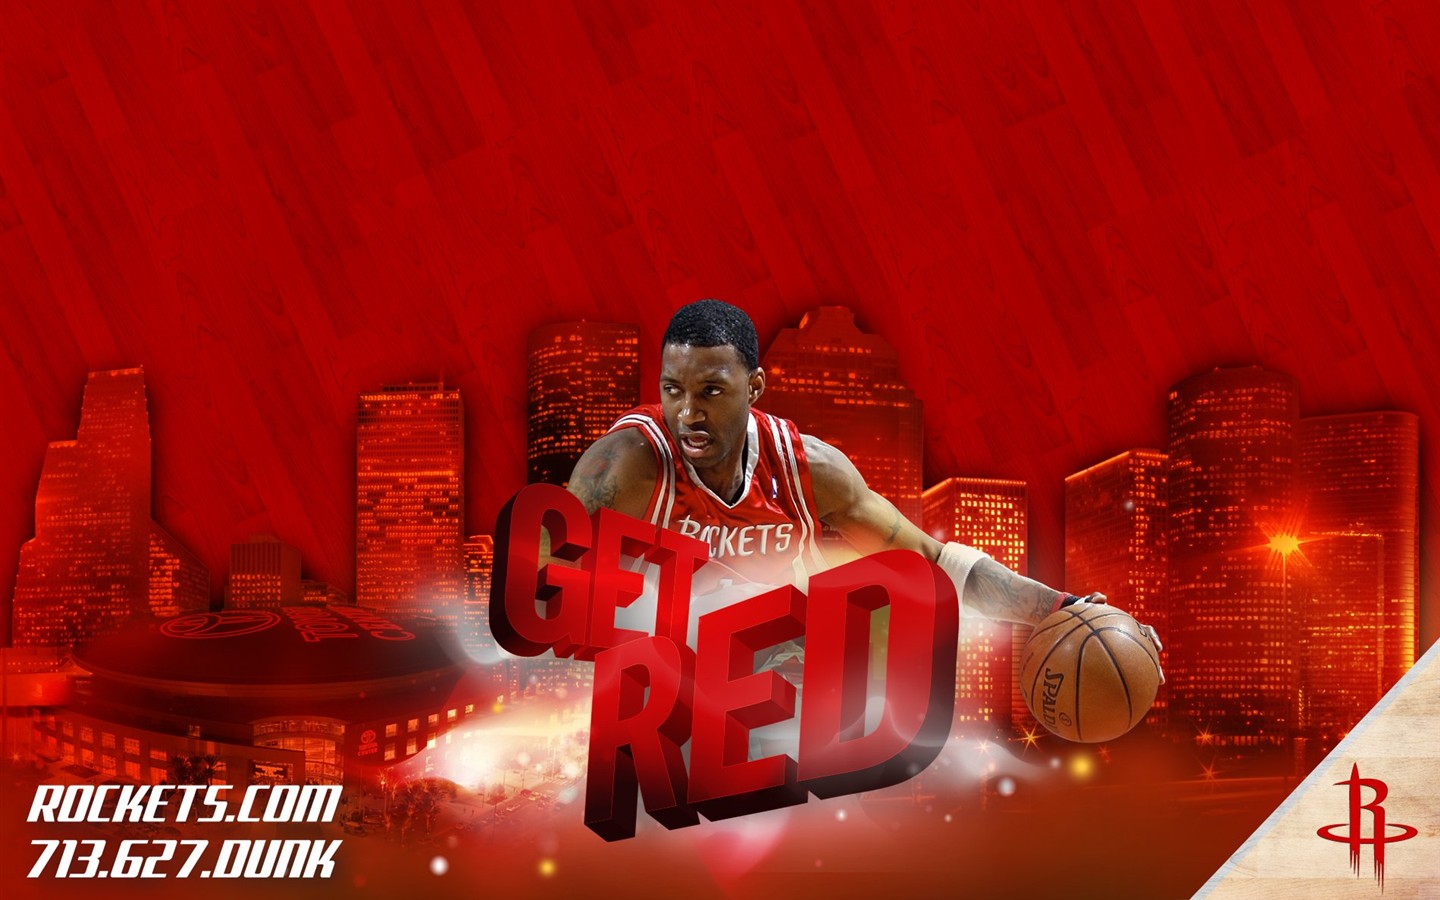 NBA Houston Rockets 2009 playoff wallpaper #4 - 1440x900